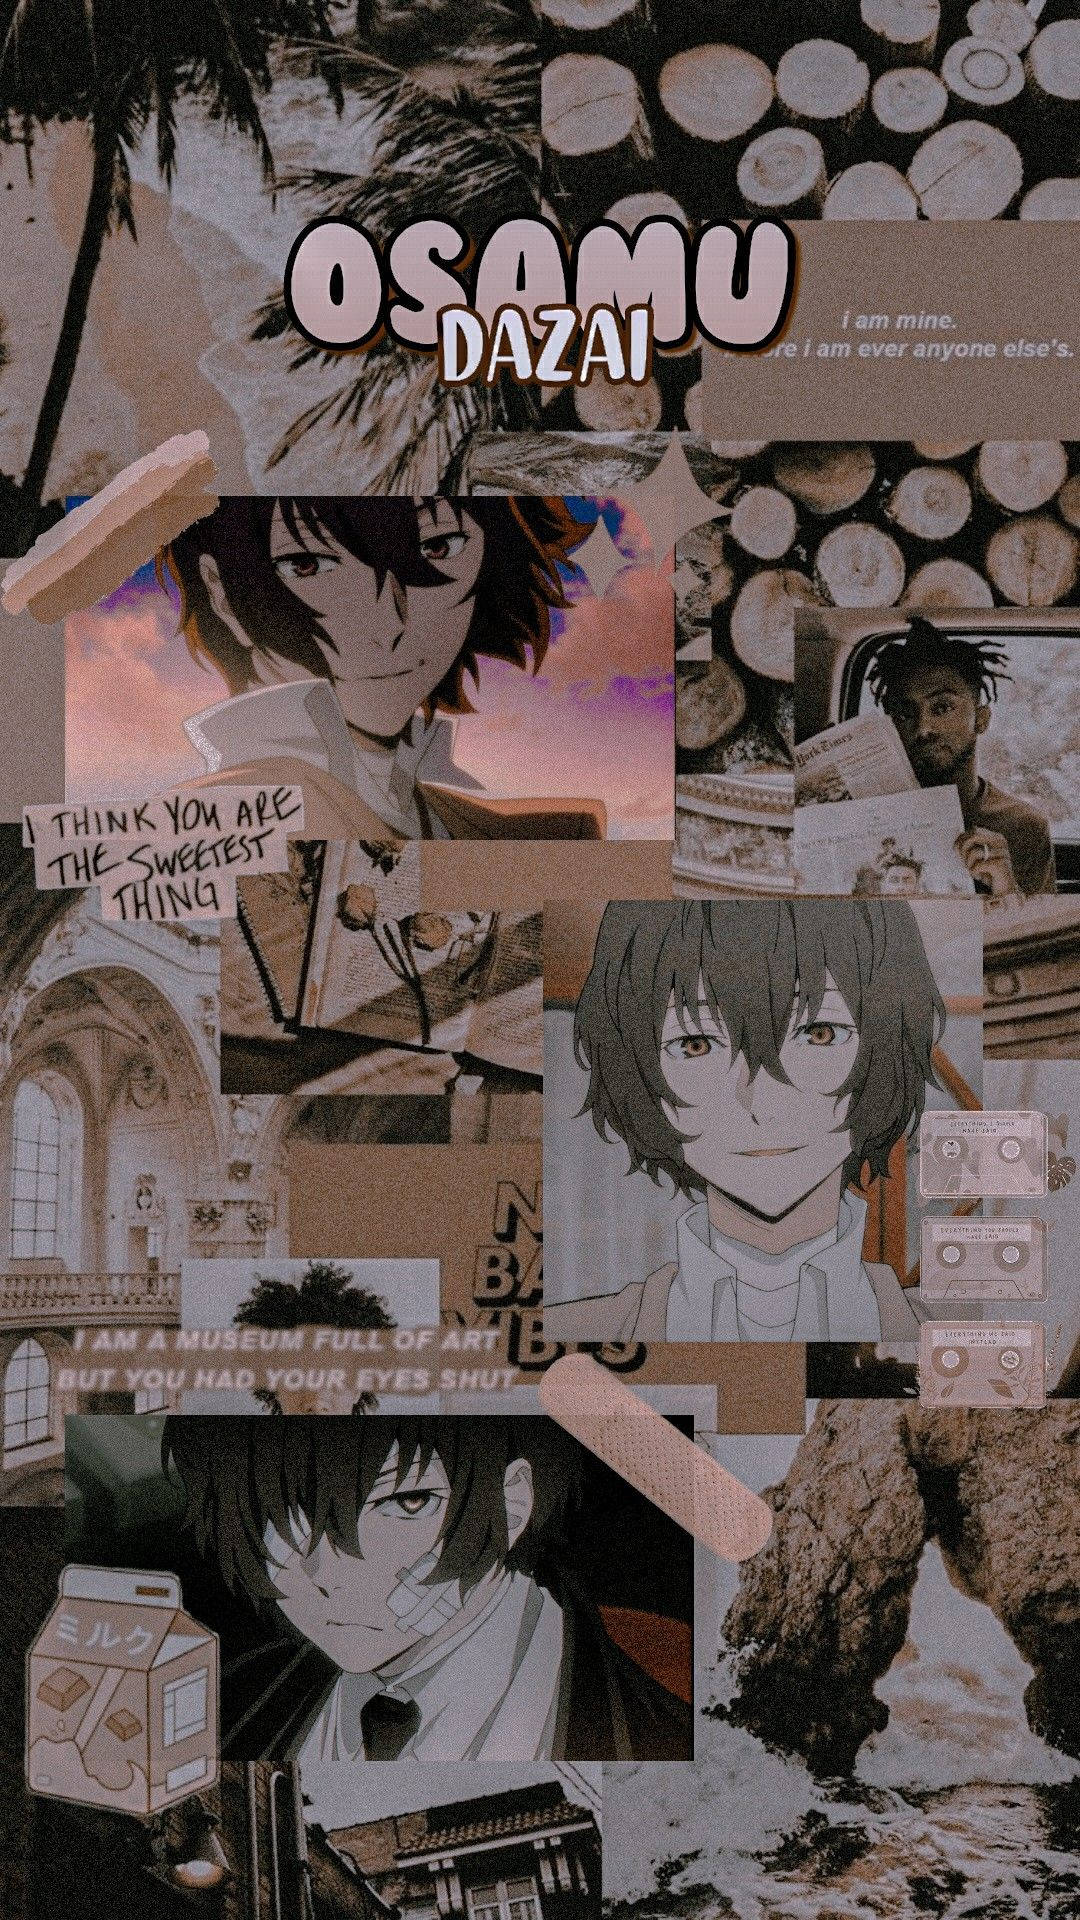 Dazai 1080X1920 Wallpaper and Background Image